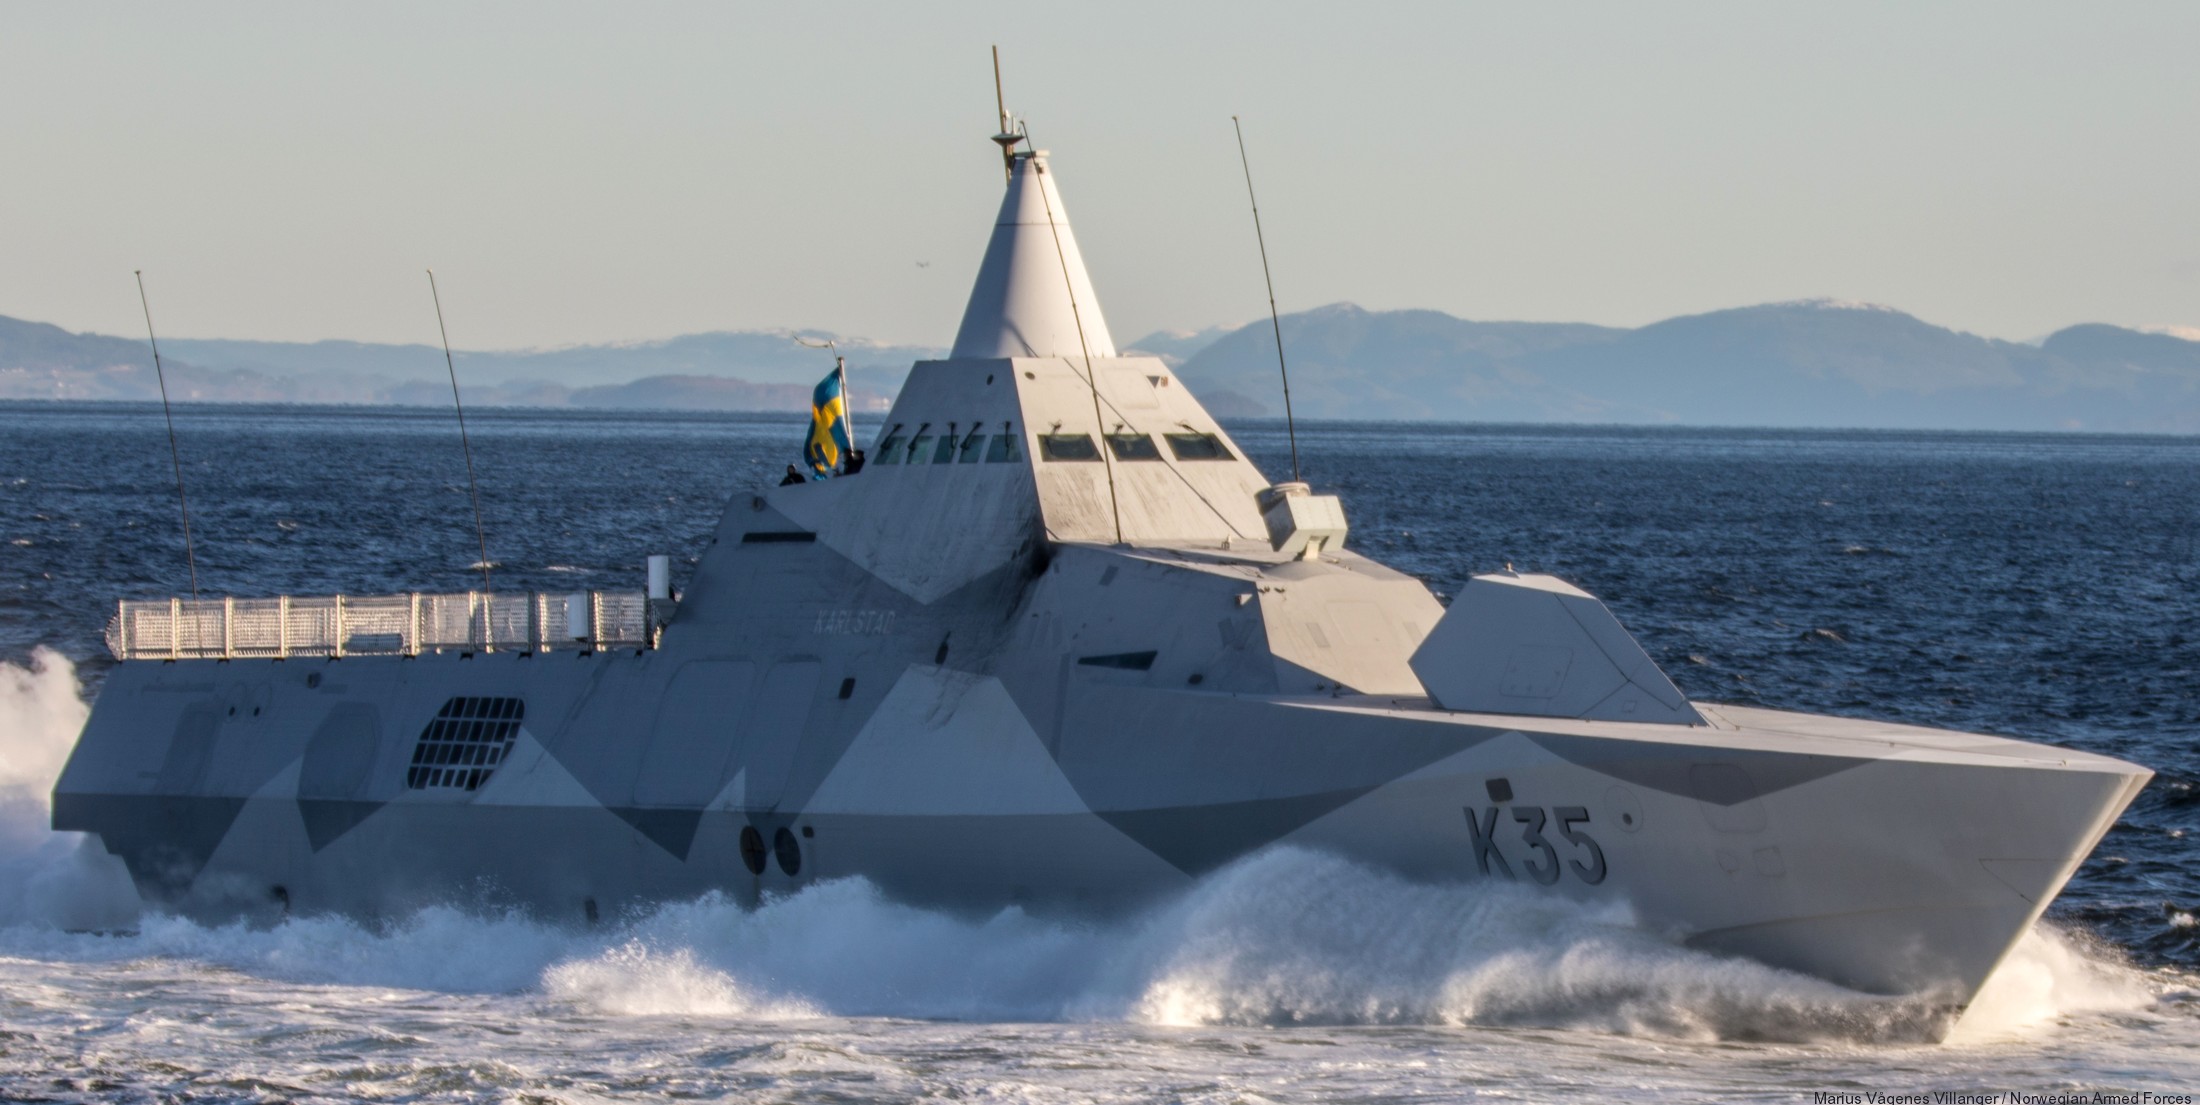 k35 hswms hms karlstad visby class corvette royal swedish navy svenska marinen 02x saab kockums